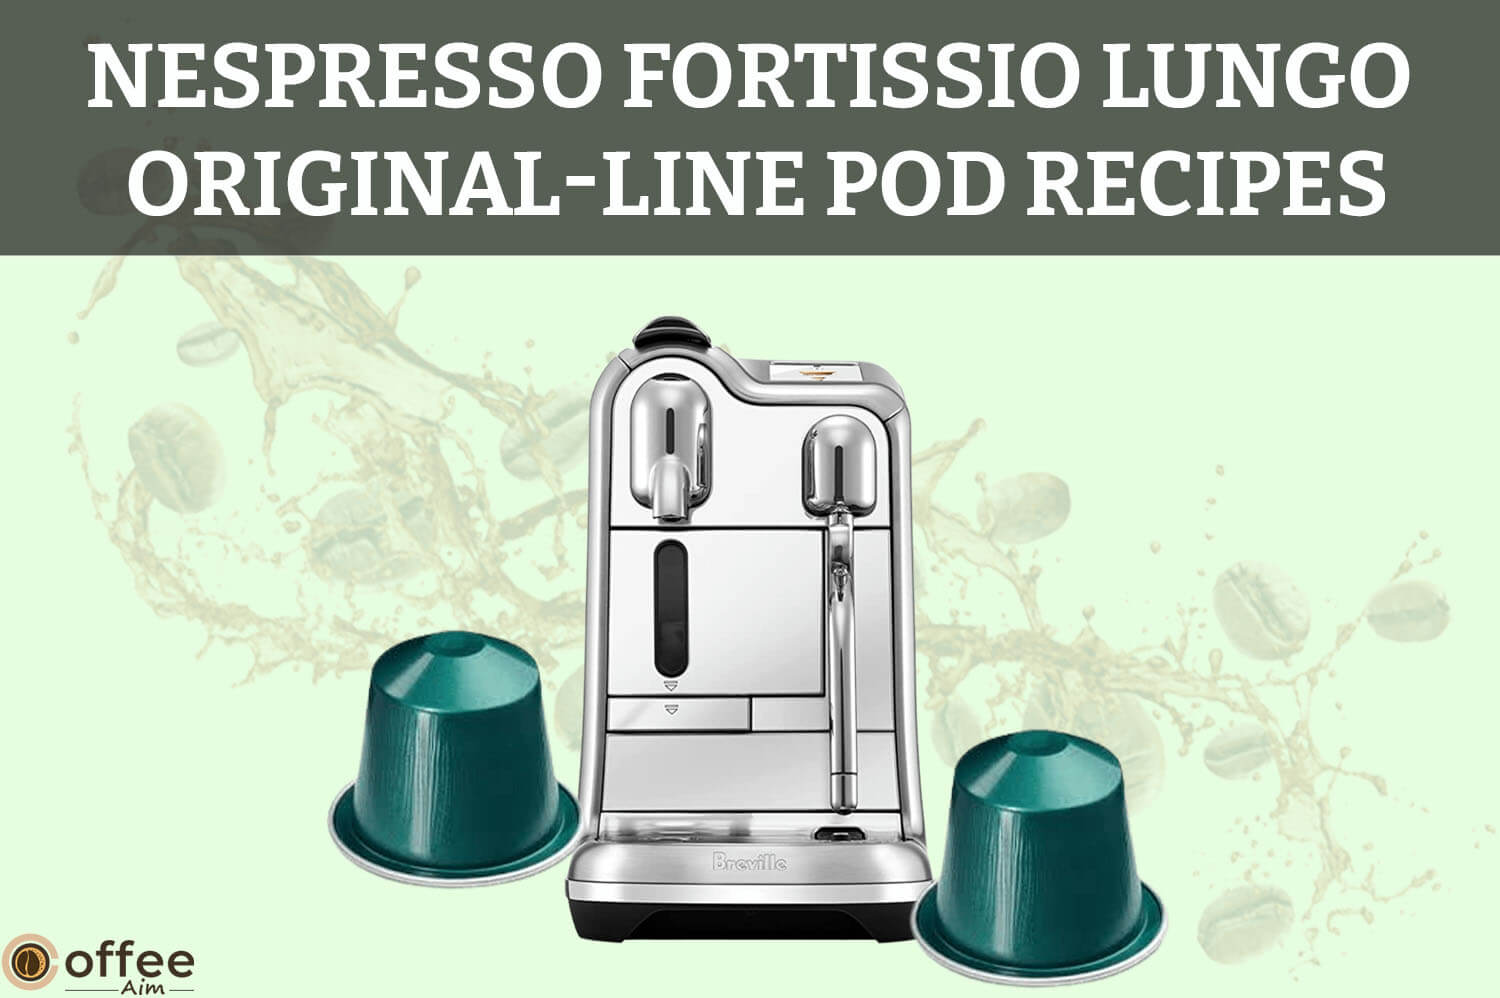 Featured image for the article "Nespresso Fortissio Lungo Original-Line Pod Recipes"